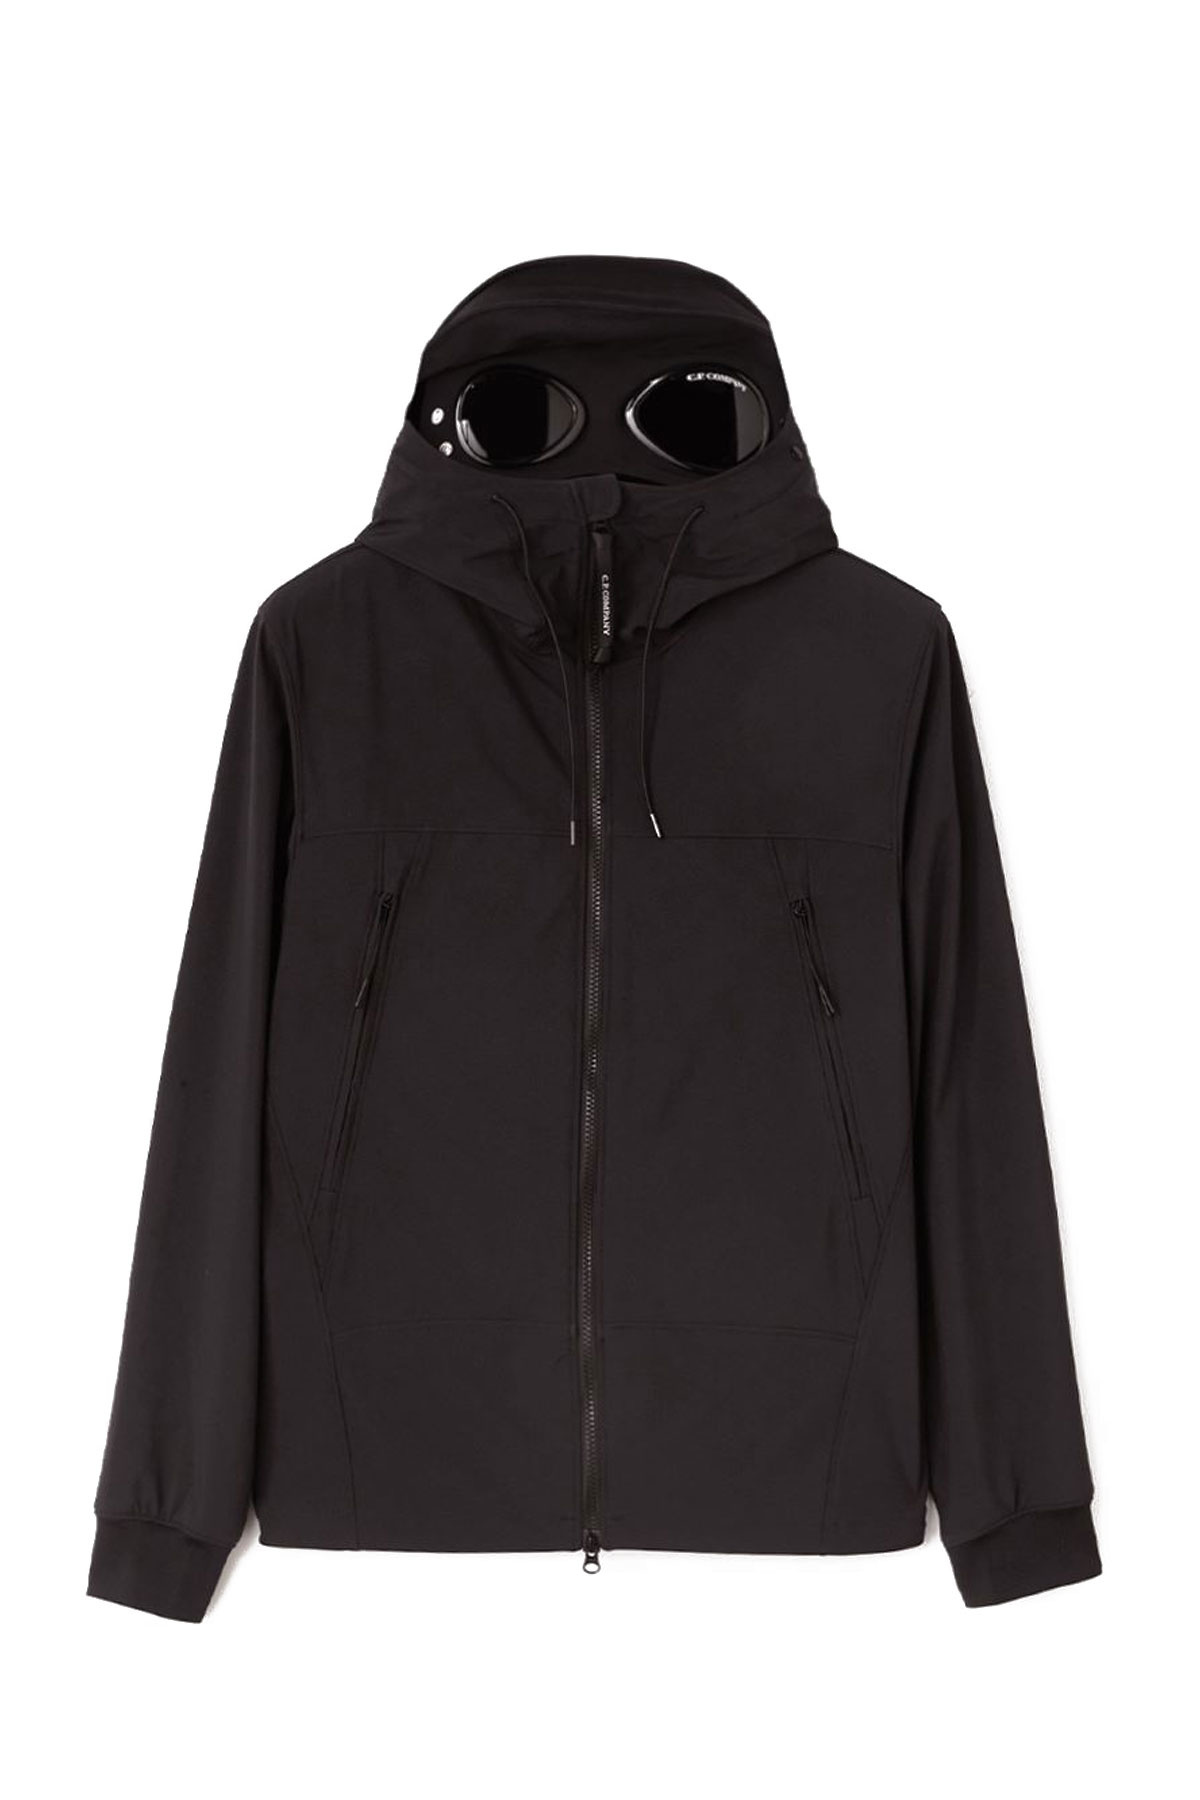 C.P. Shell-R Medium Goggle Jacket-Black - Coats